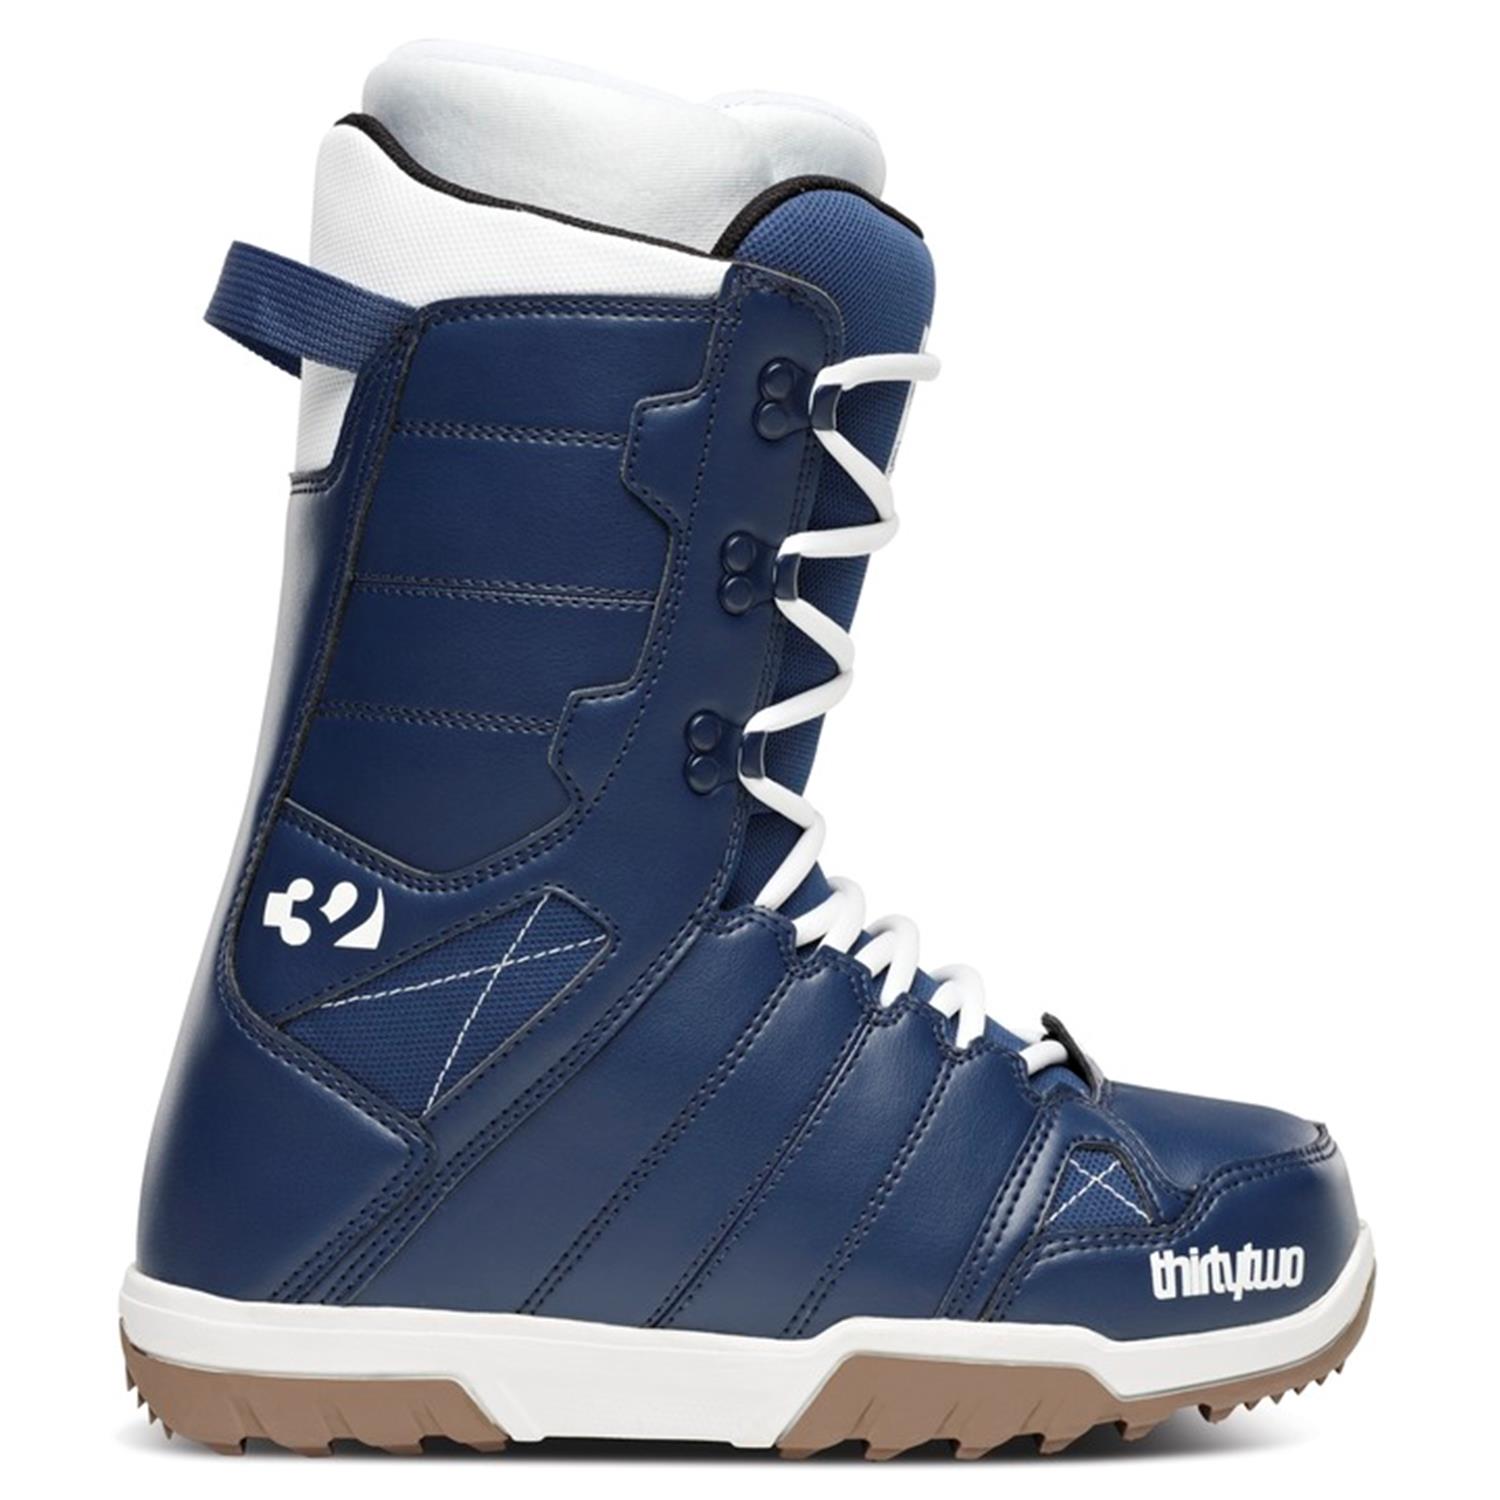 32 Exit Snowboard Boots 2015 | evo